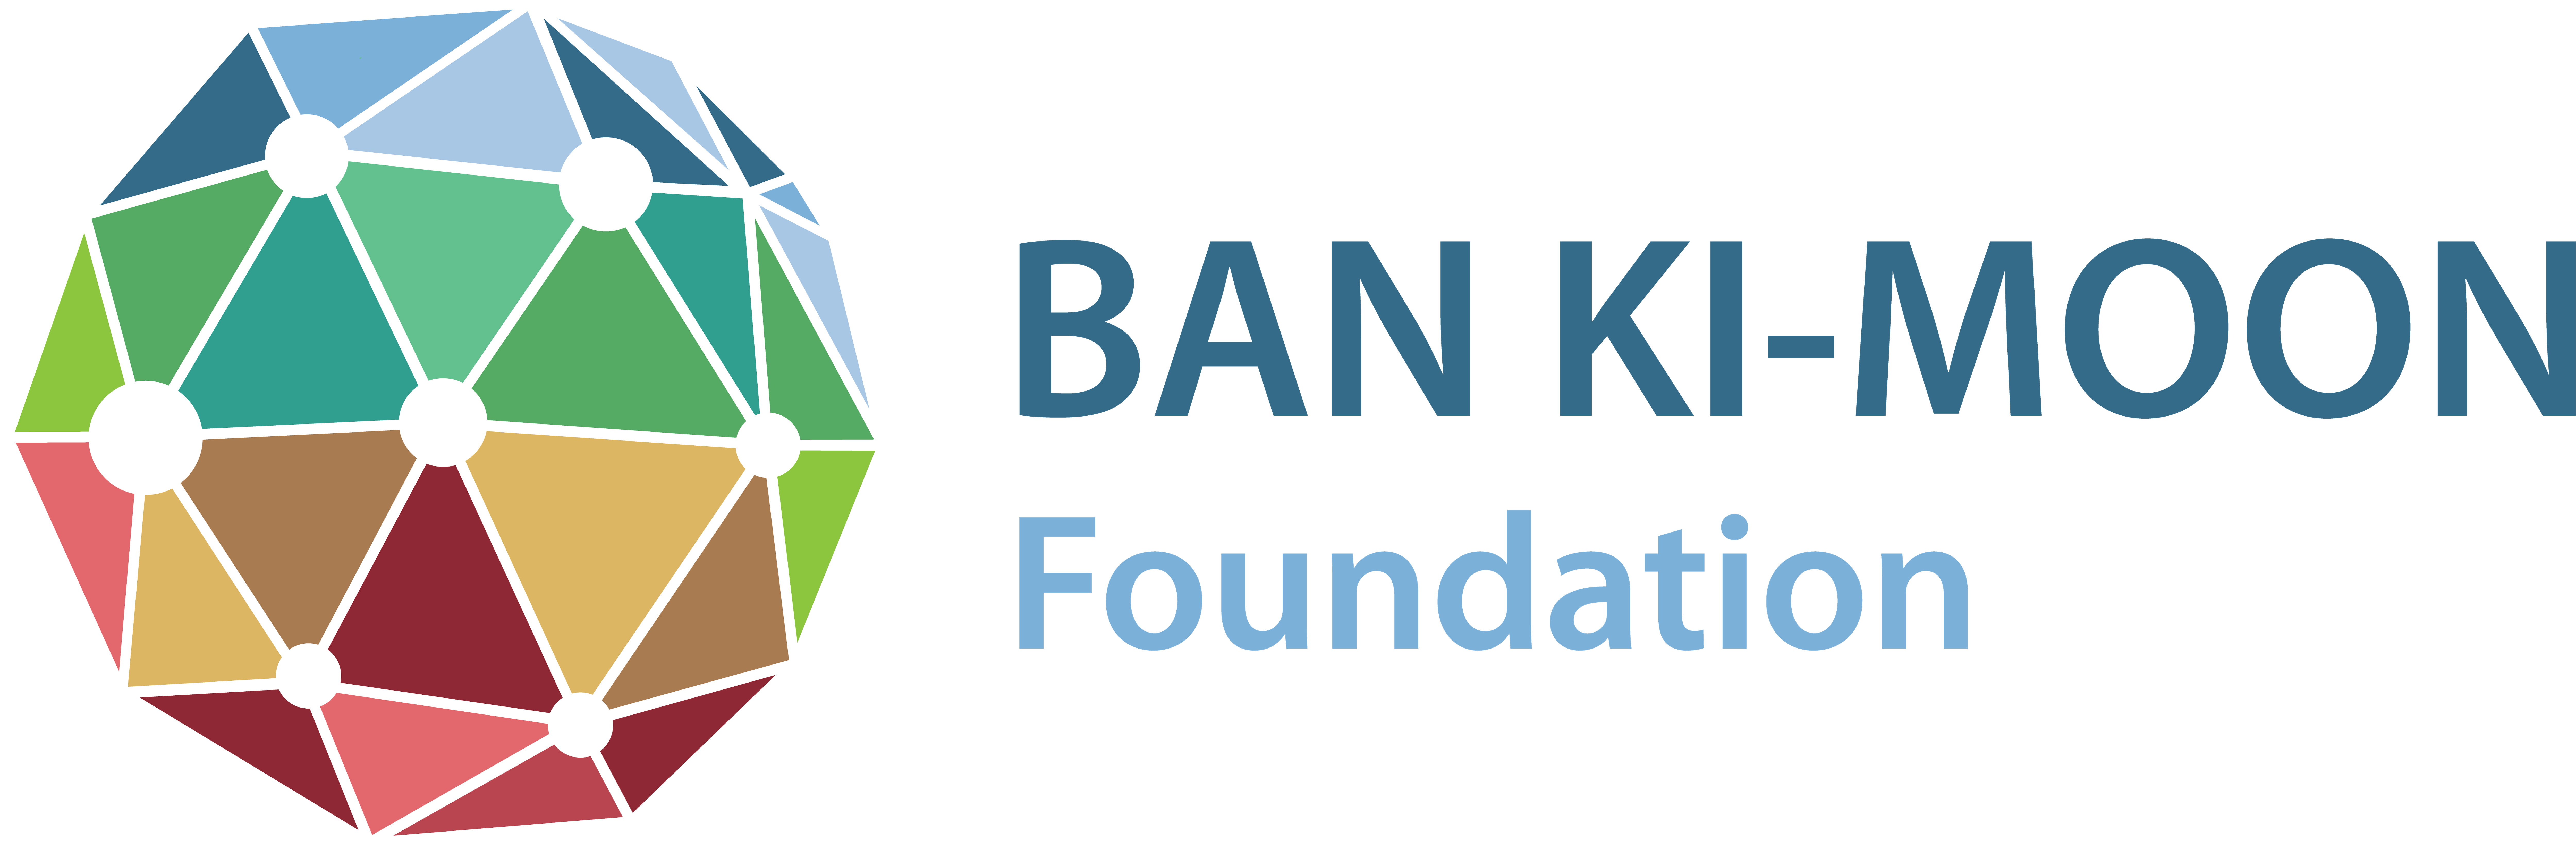 Foundation for the Ban Ki-moon Centre logo